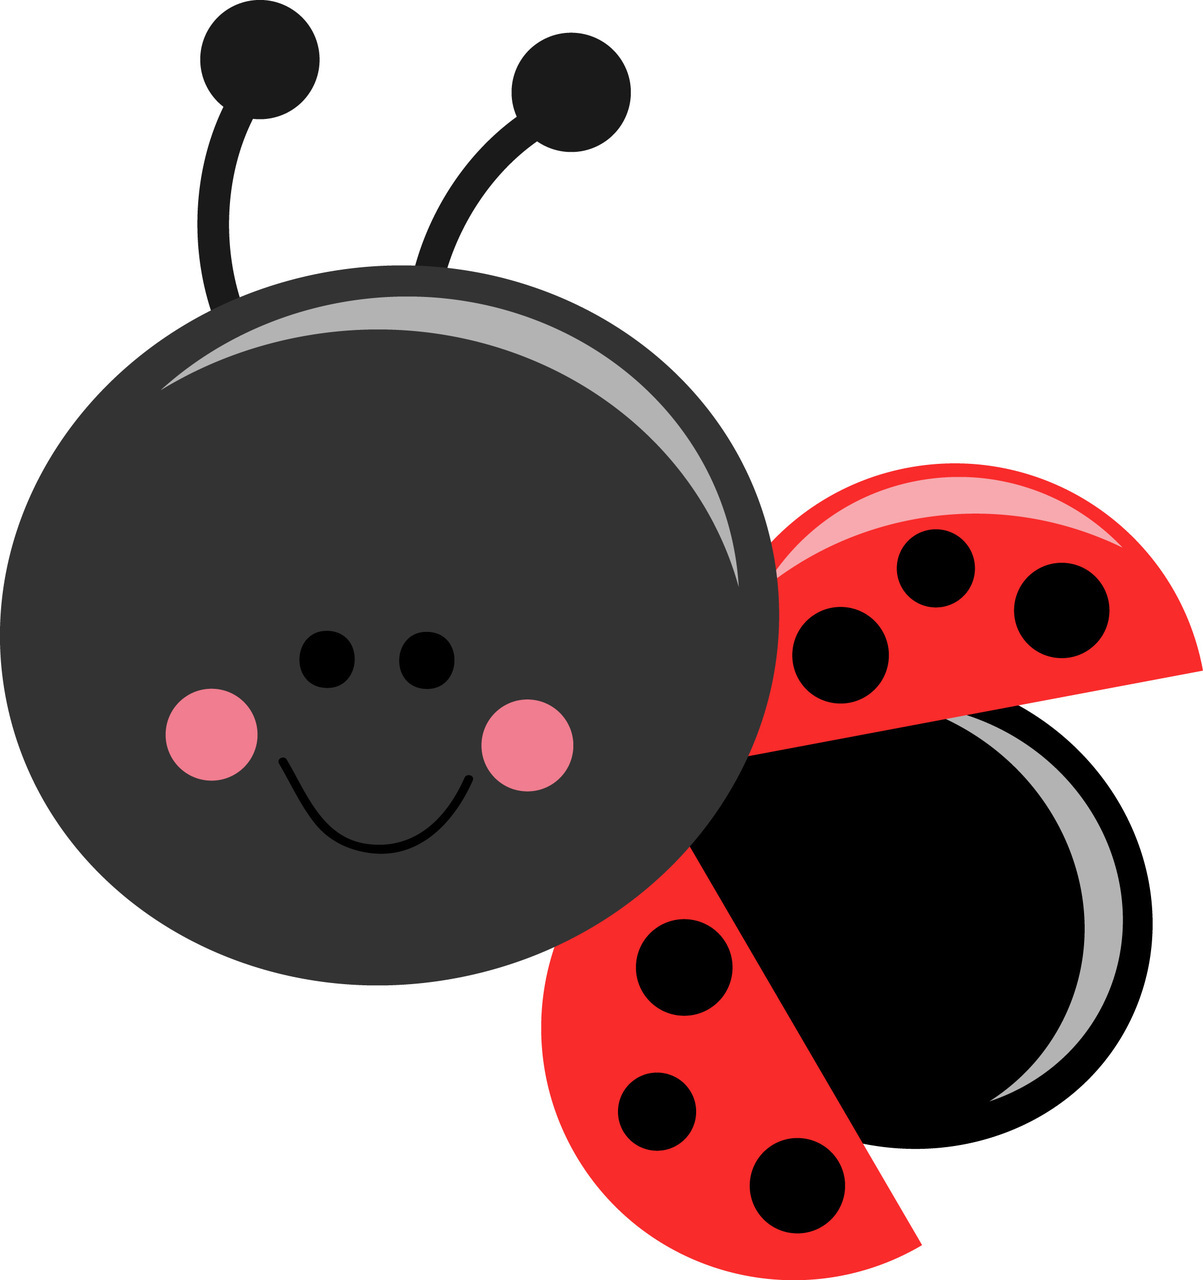 Free Cartoon Ladybug Cliparts, Download Free Cartoon Ladybug Cliparts